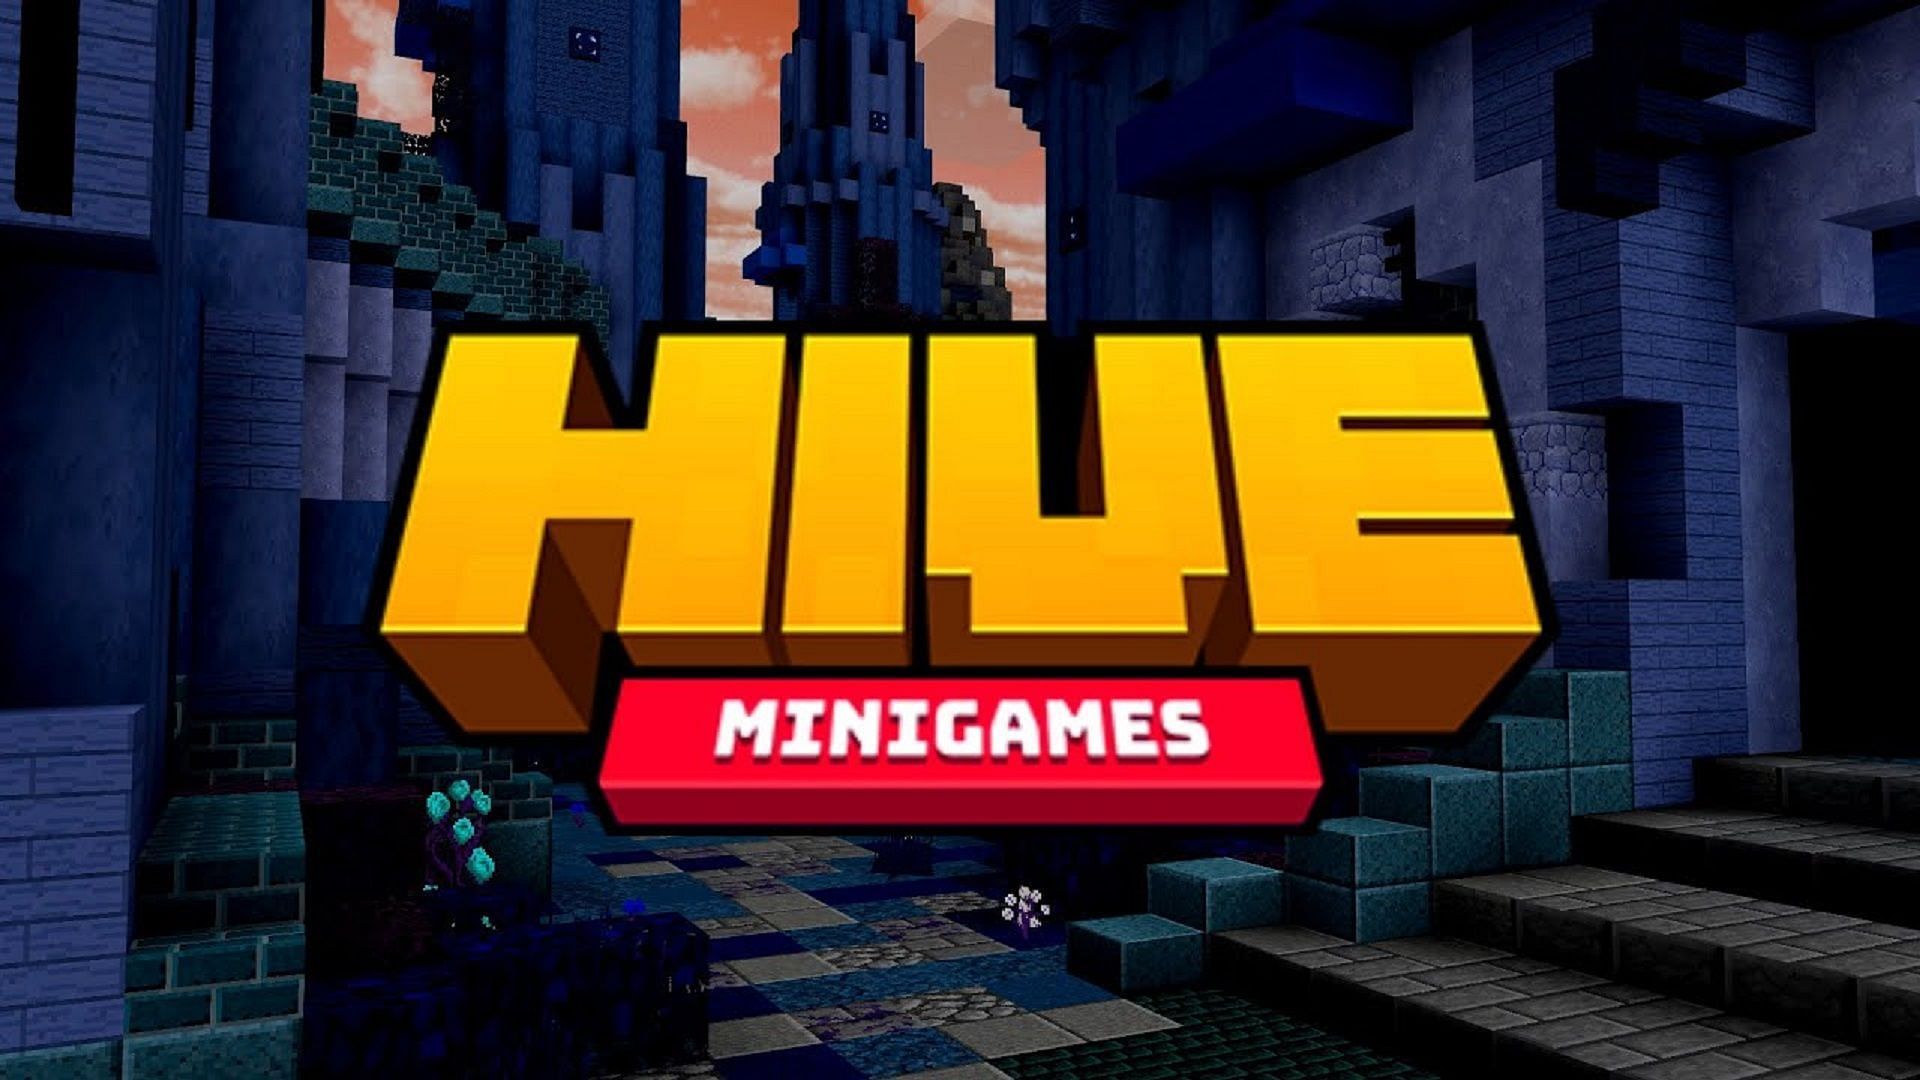 A Trailer Shot Of The Hive'S Minecraft Minigames World (Image Via Potatopie25/Youtube)